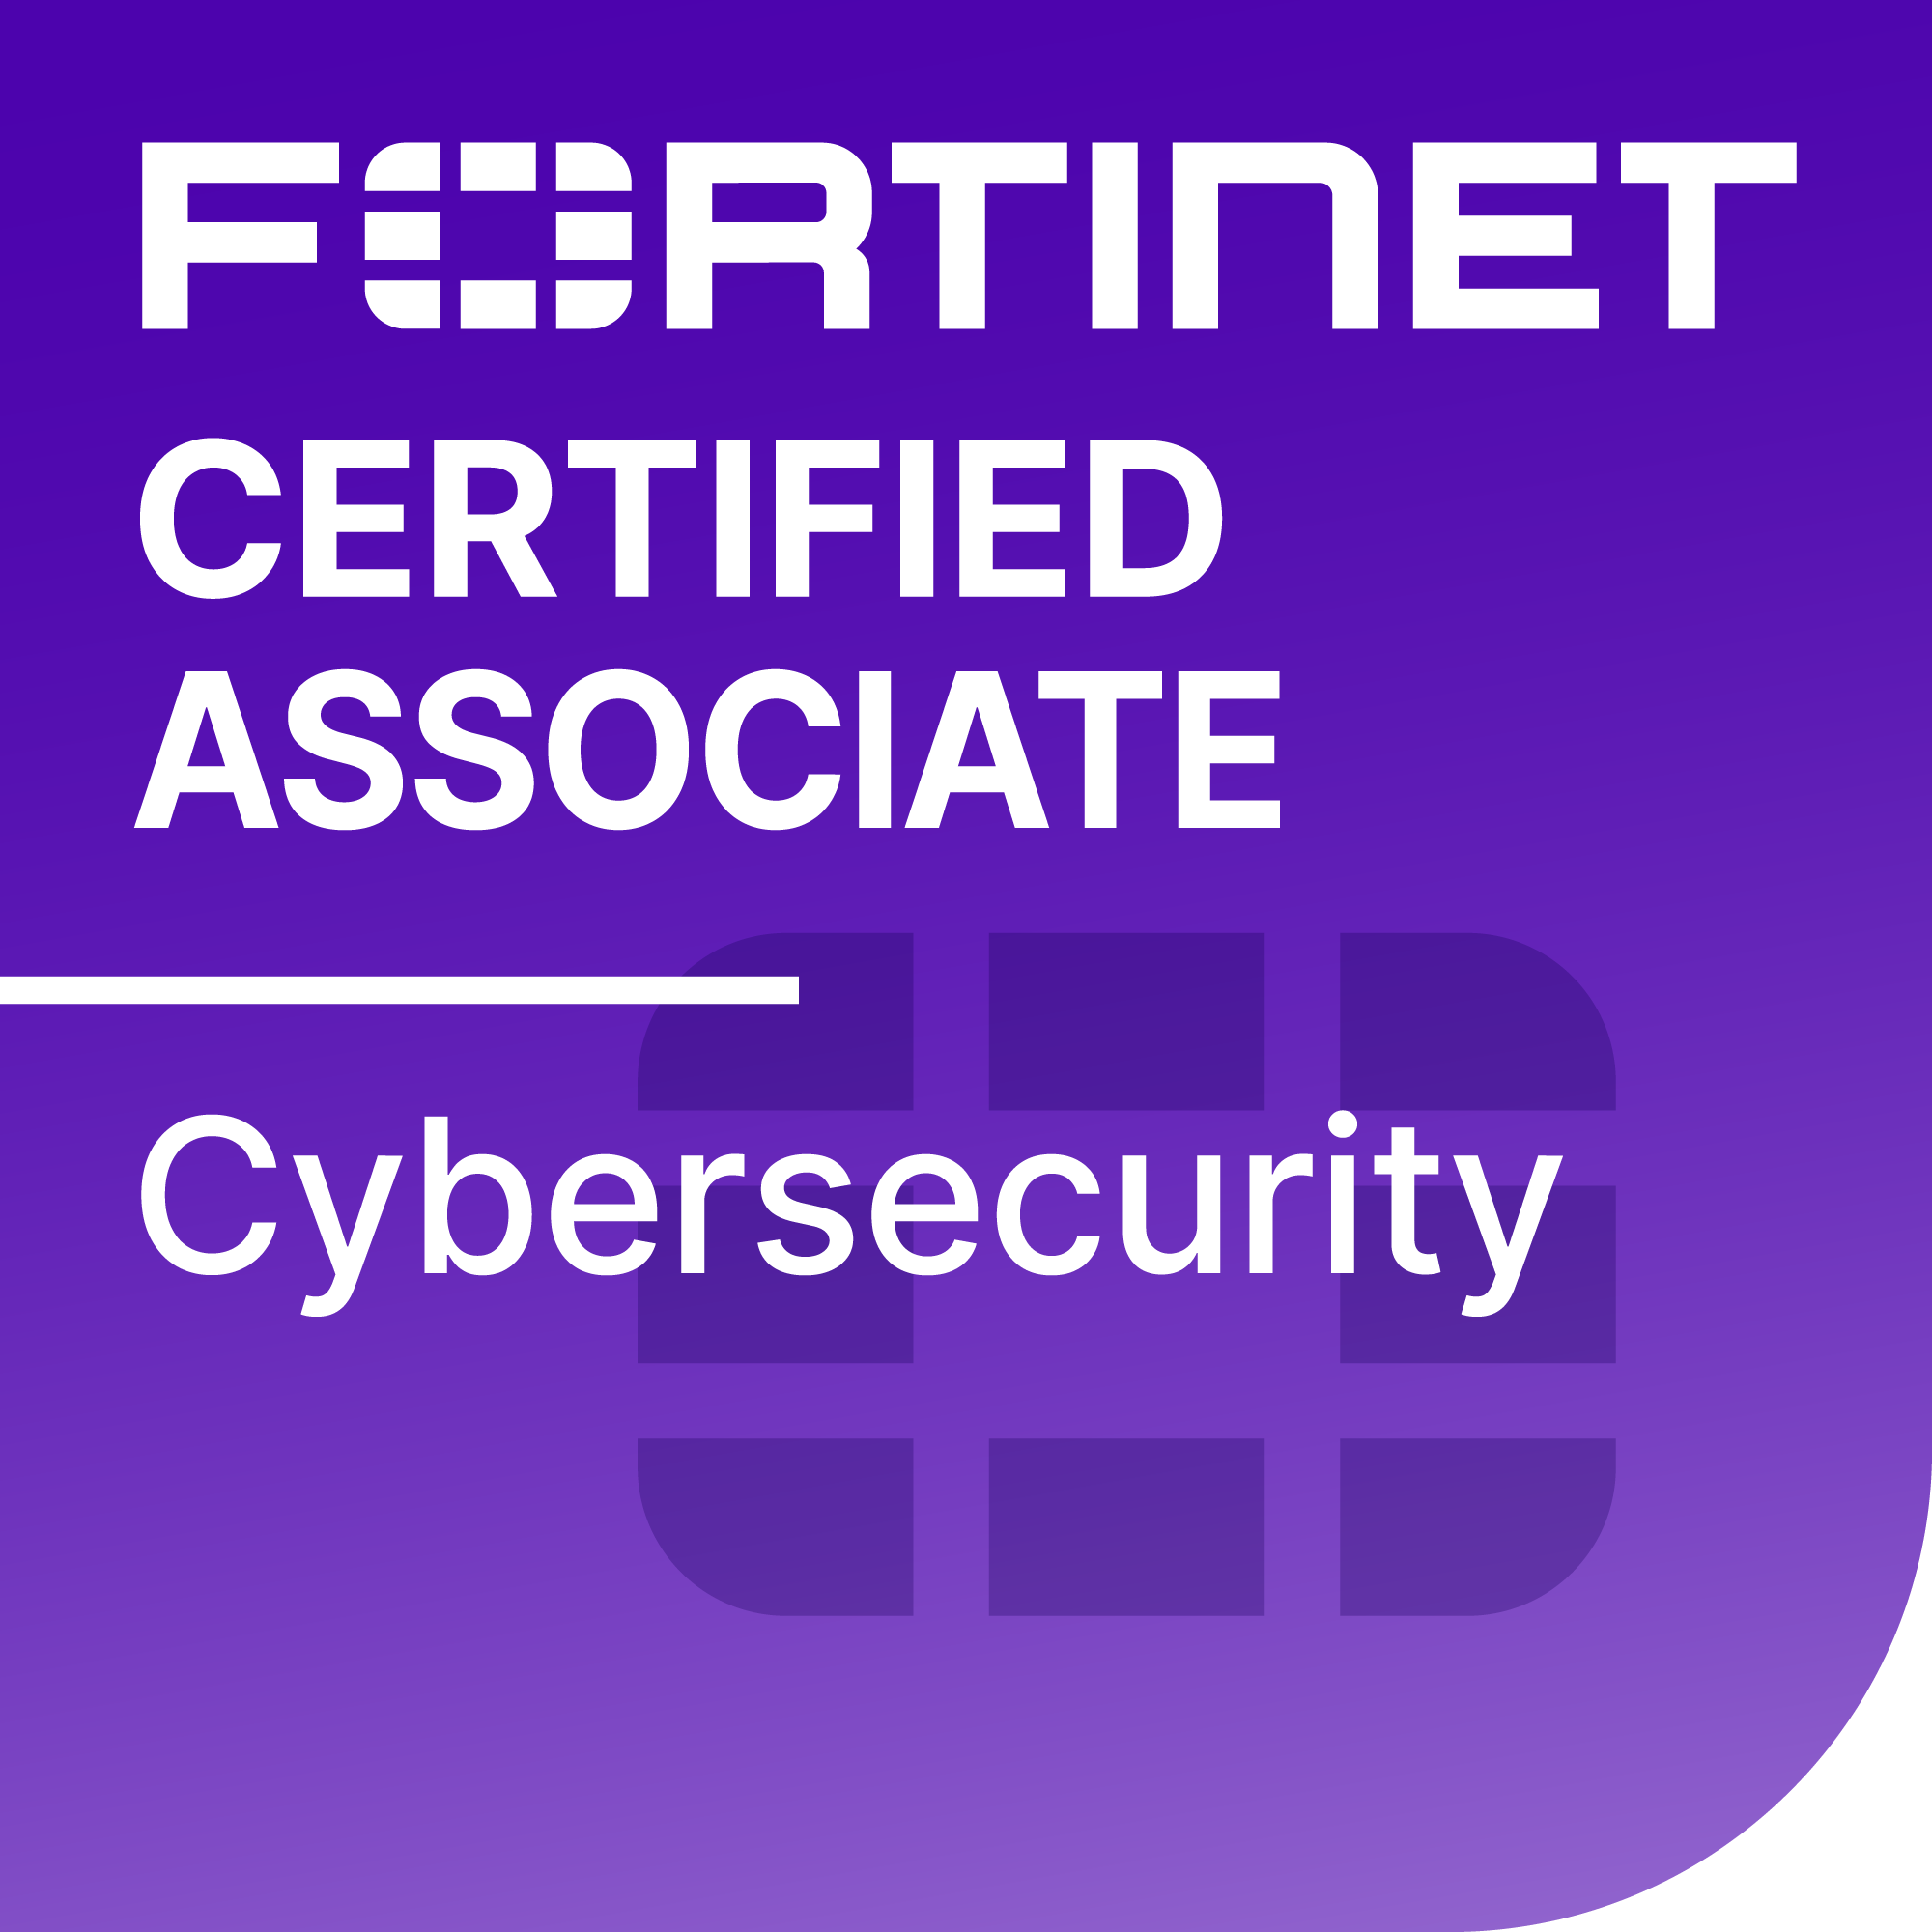 Fortinet Certified Associate, Cybersecurity